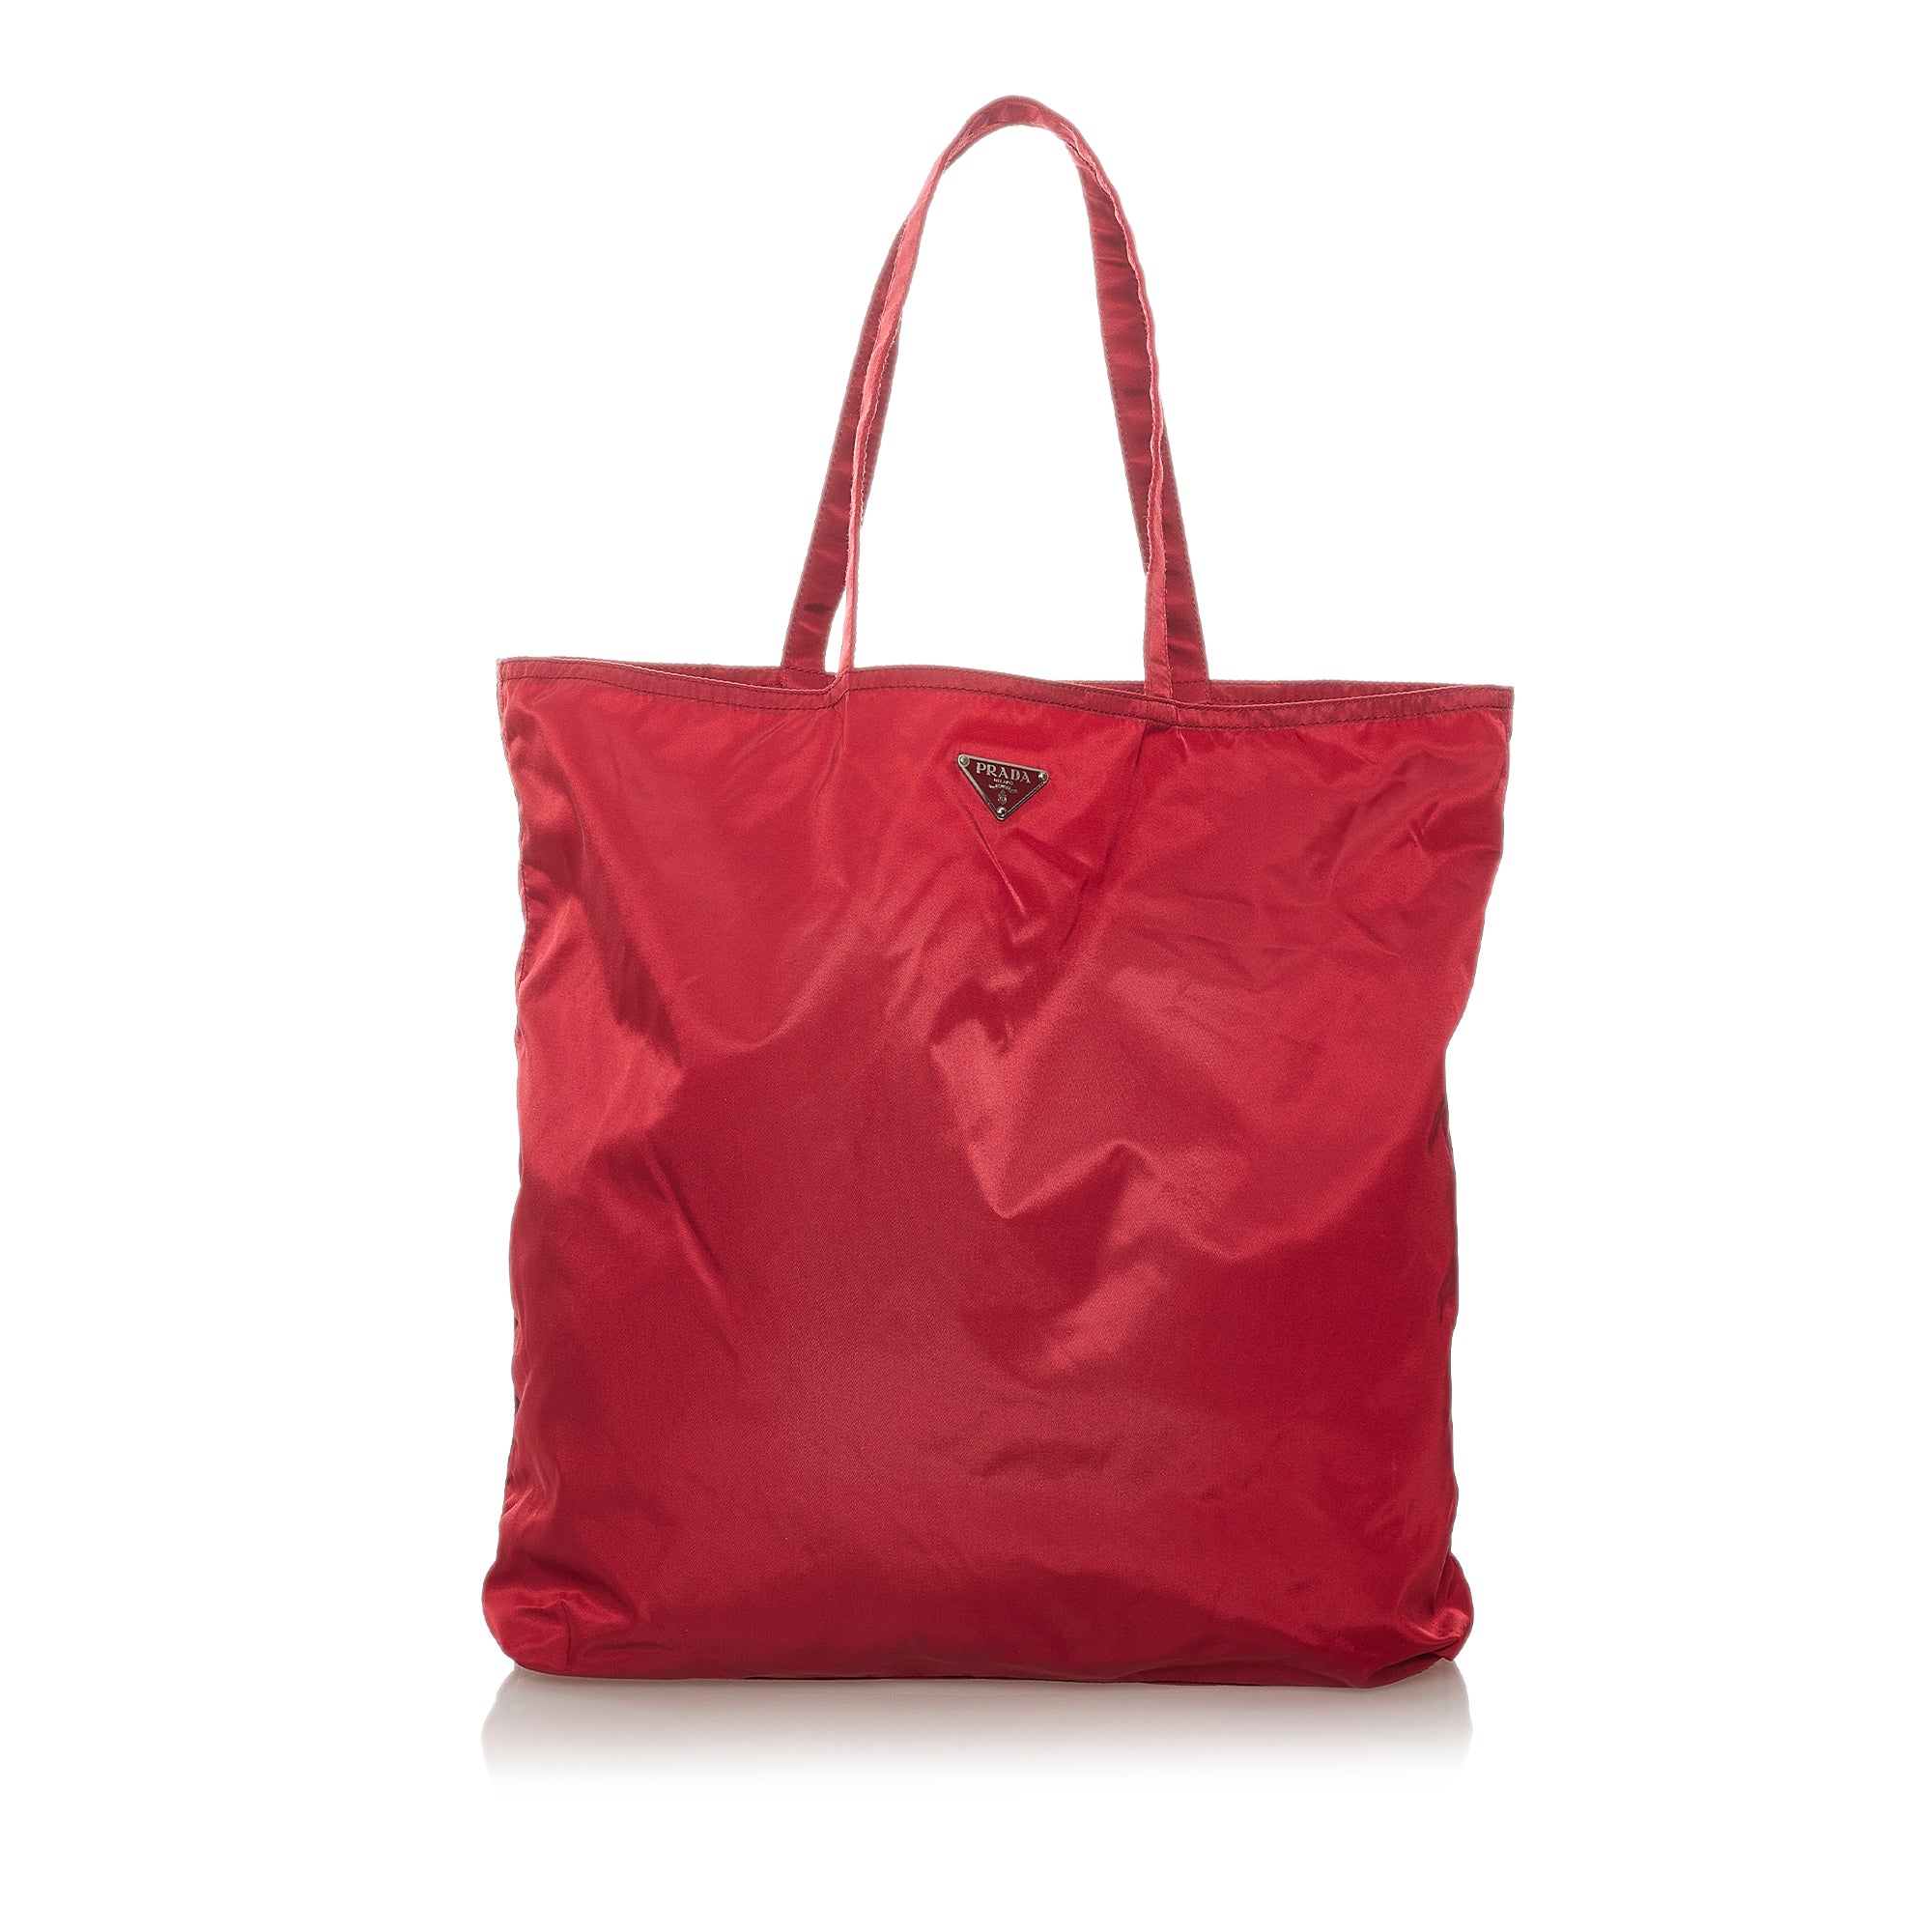 Prada Galleria Bag colors - Fashion - #